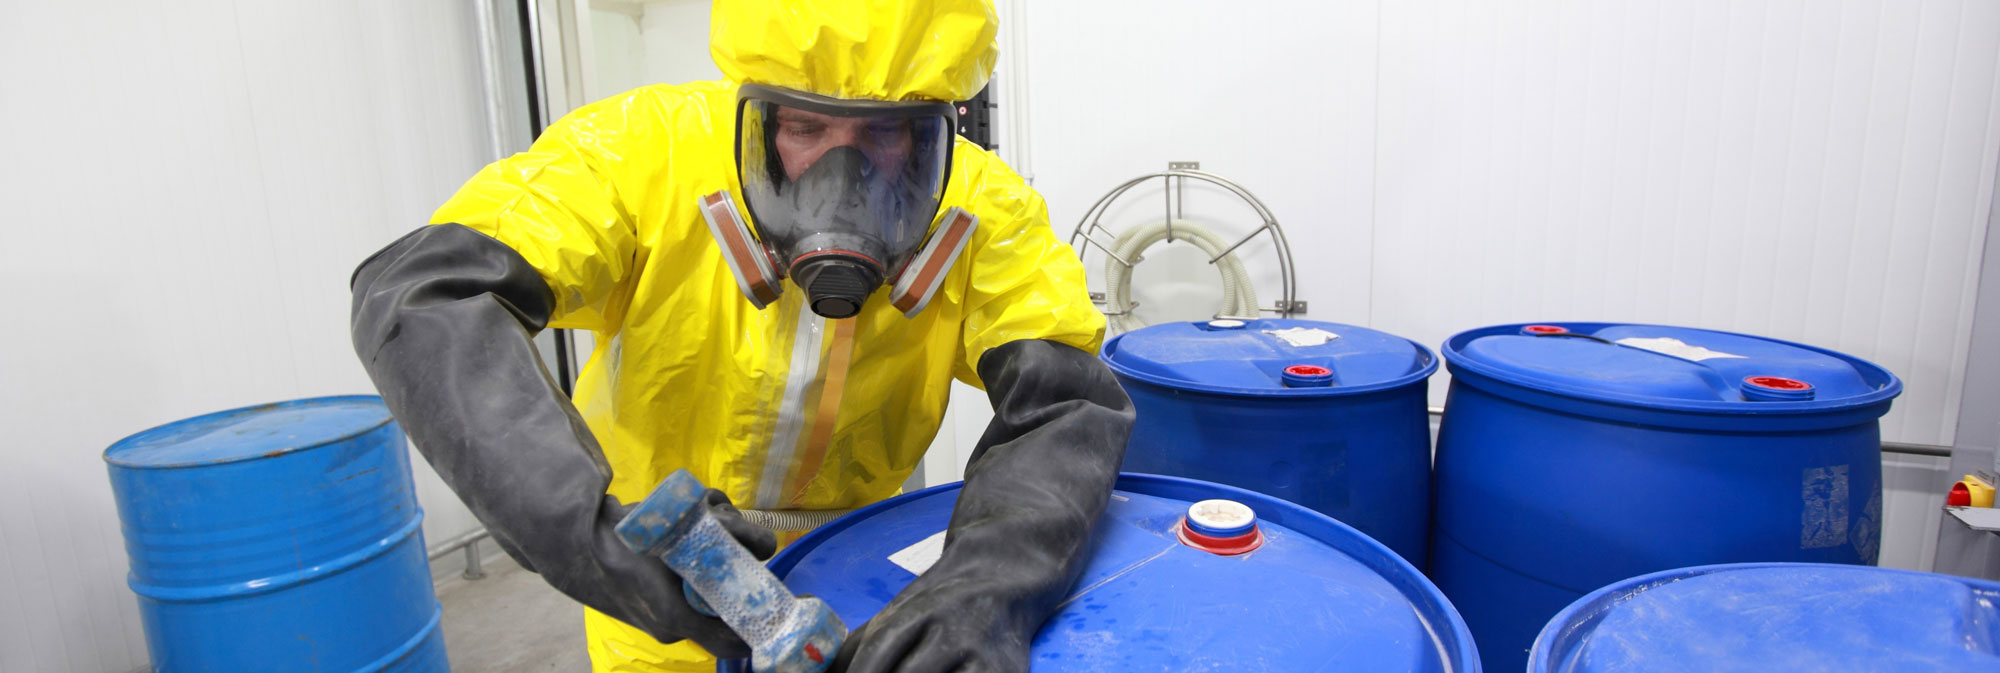 Hazardous Waste chemical Disposal in North Charleston